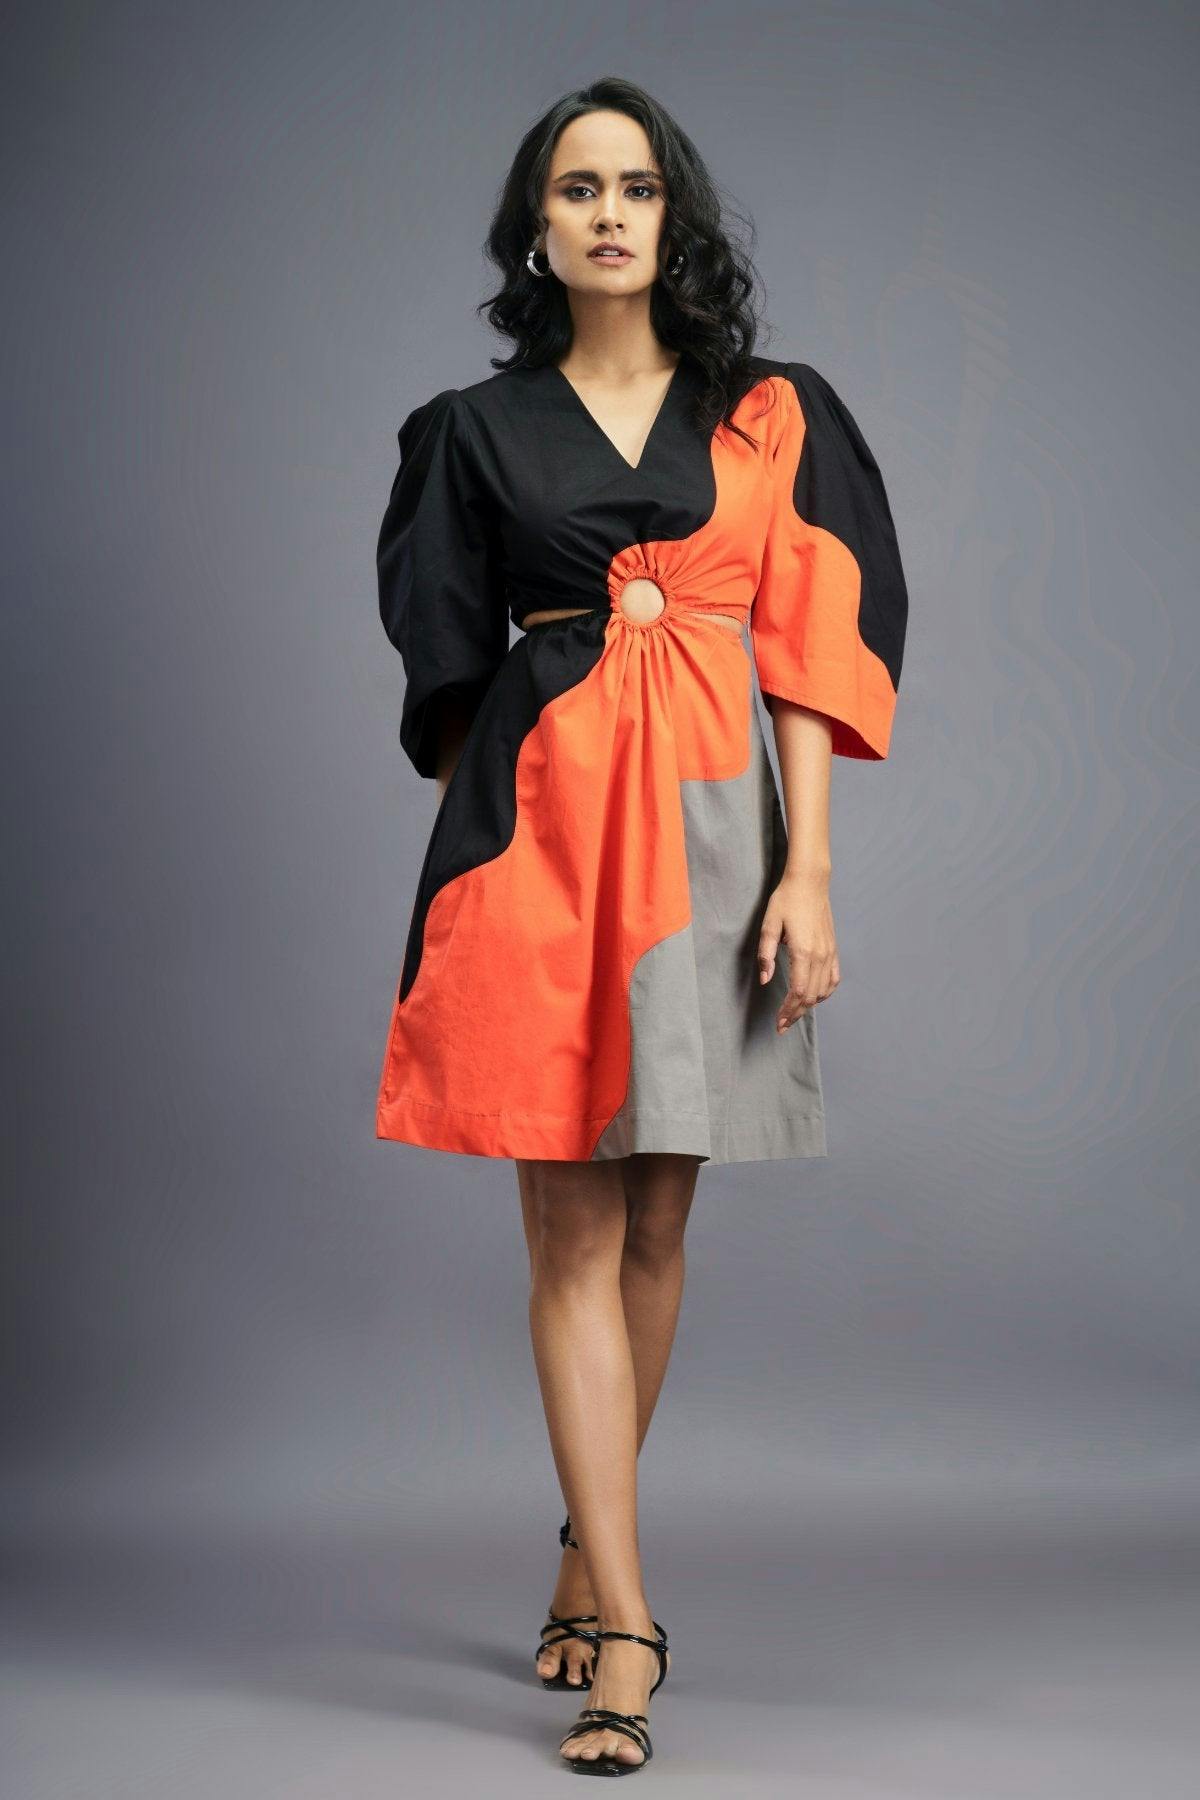 Thumbnail preview #3 for BB-1106-OG - Black Orange Cutout Dress